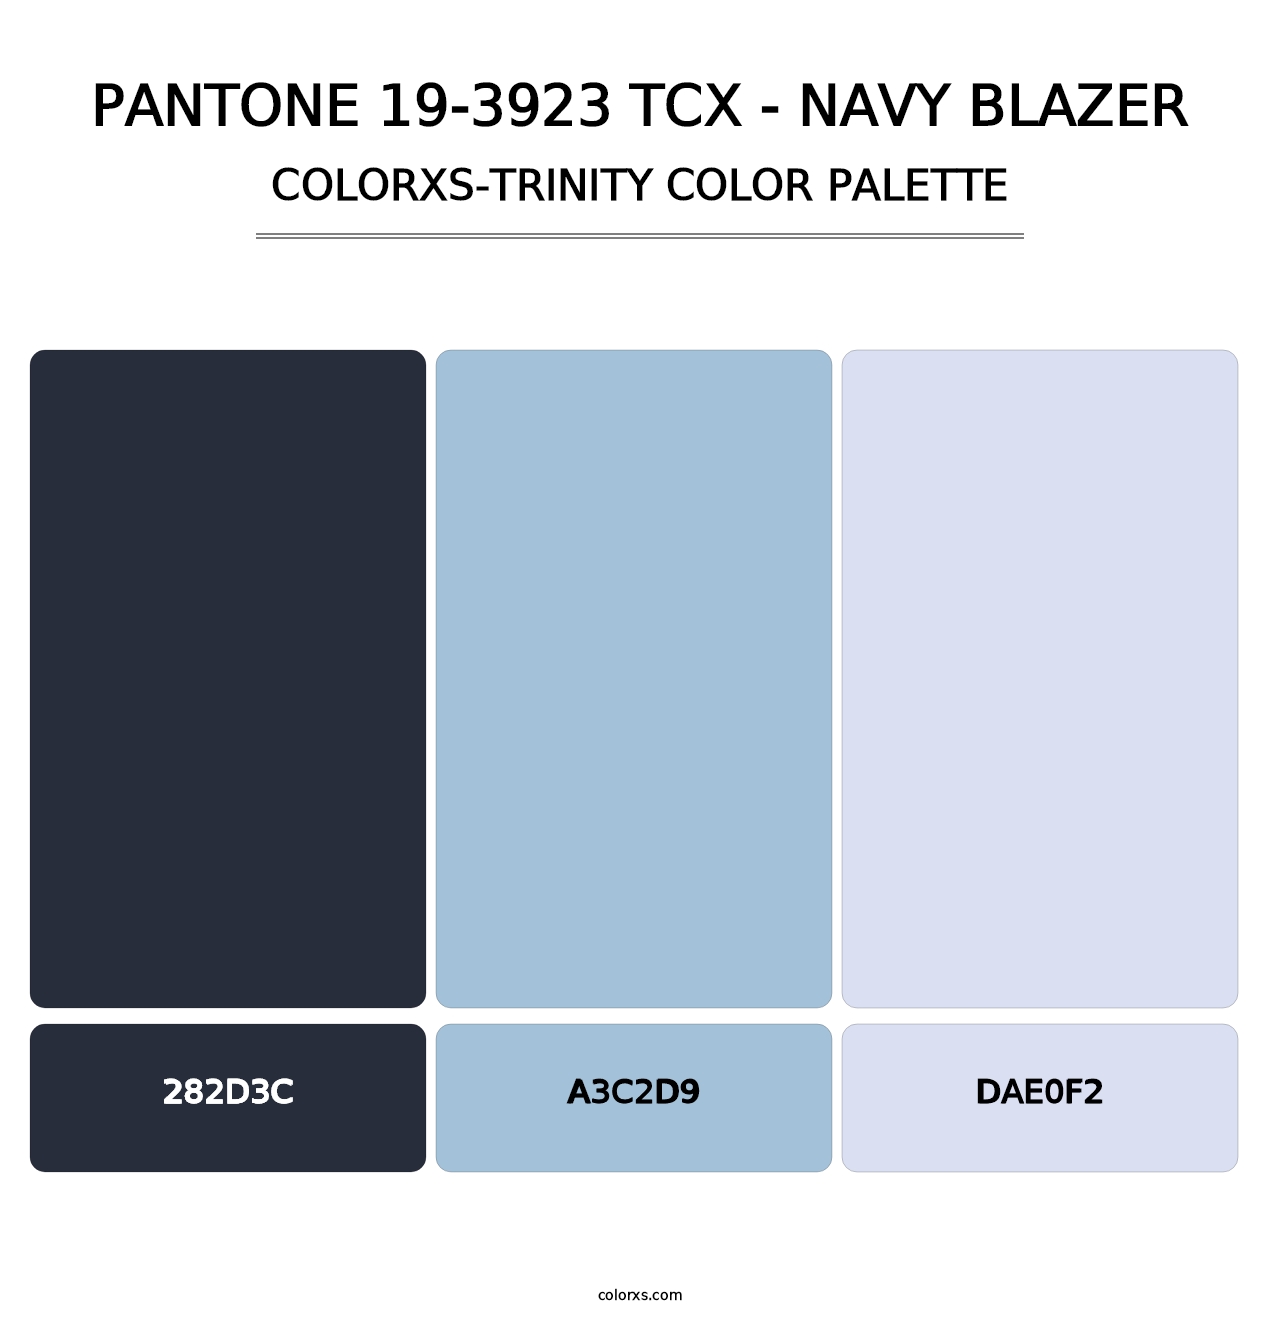 PANTONE 19-3923 TCX - Navy Blazer - Colorxs Trinity Palette